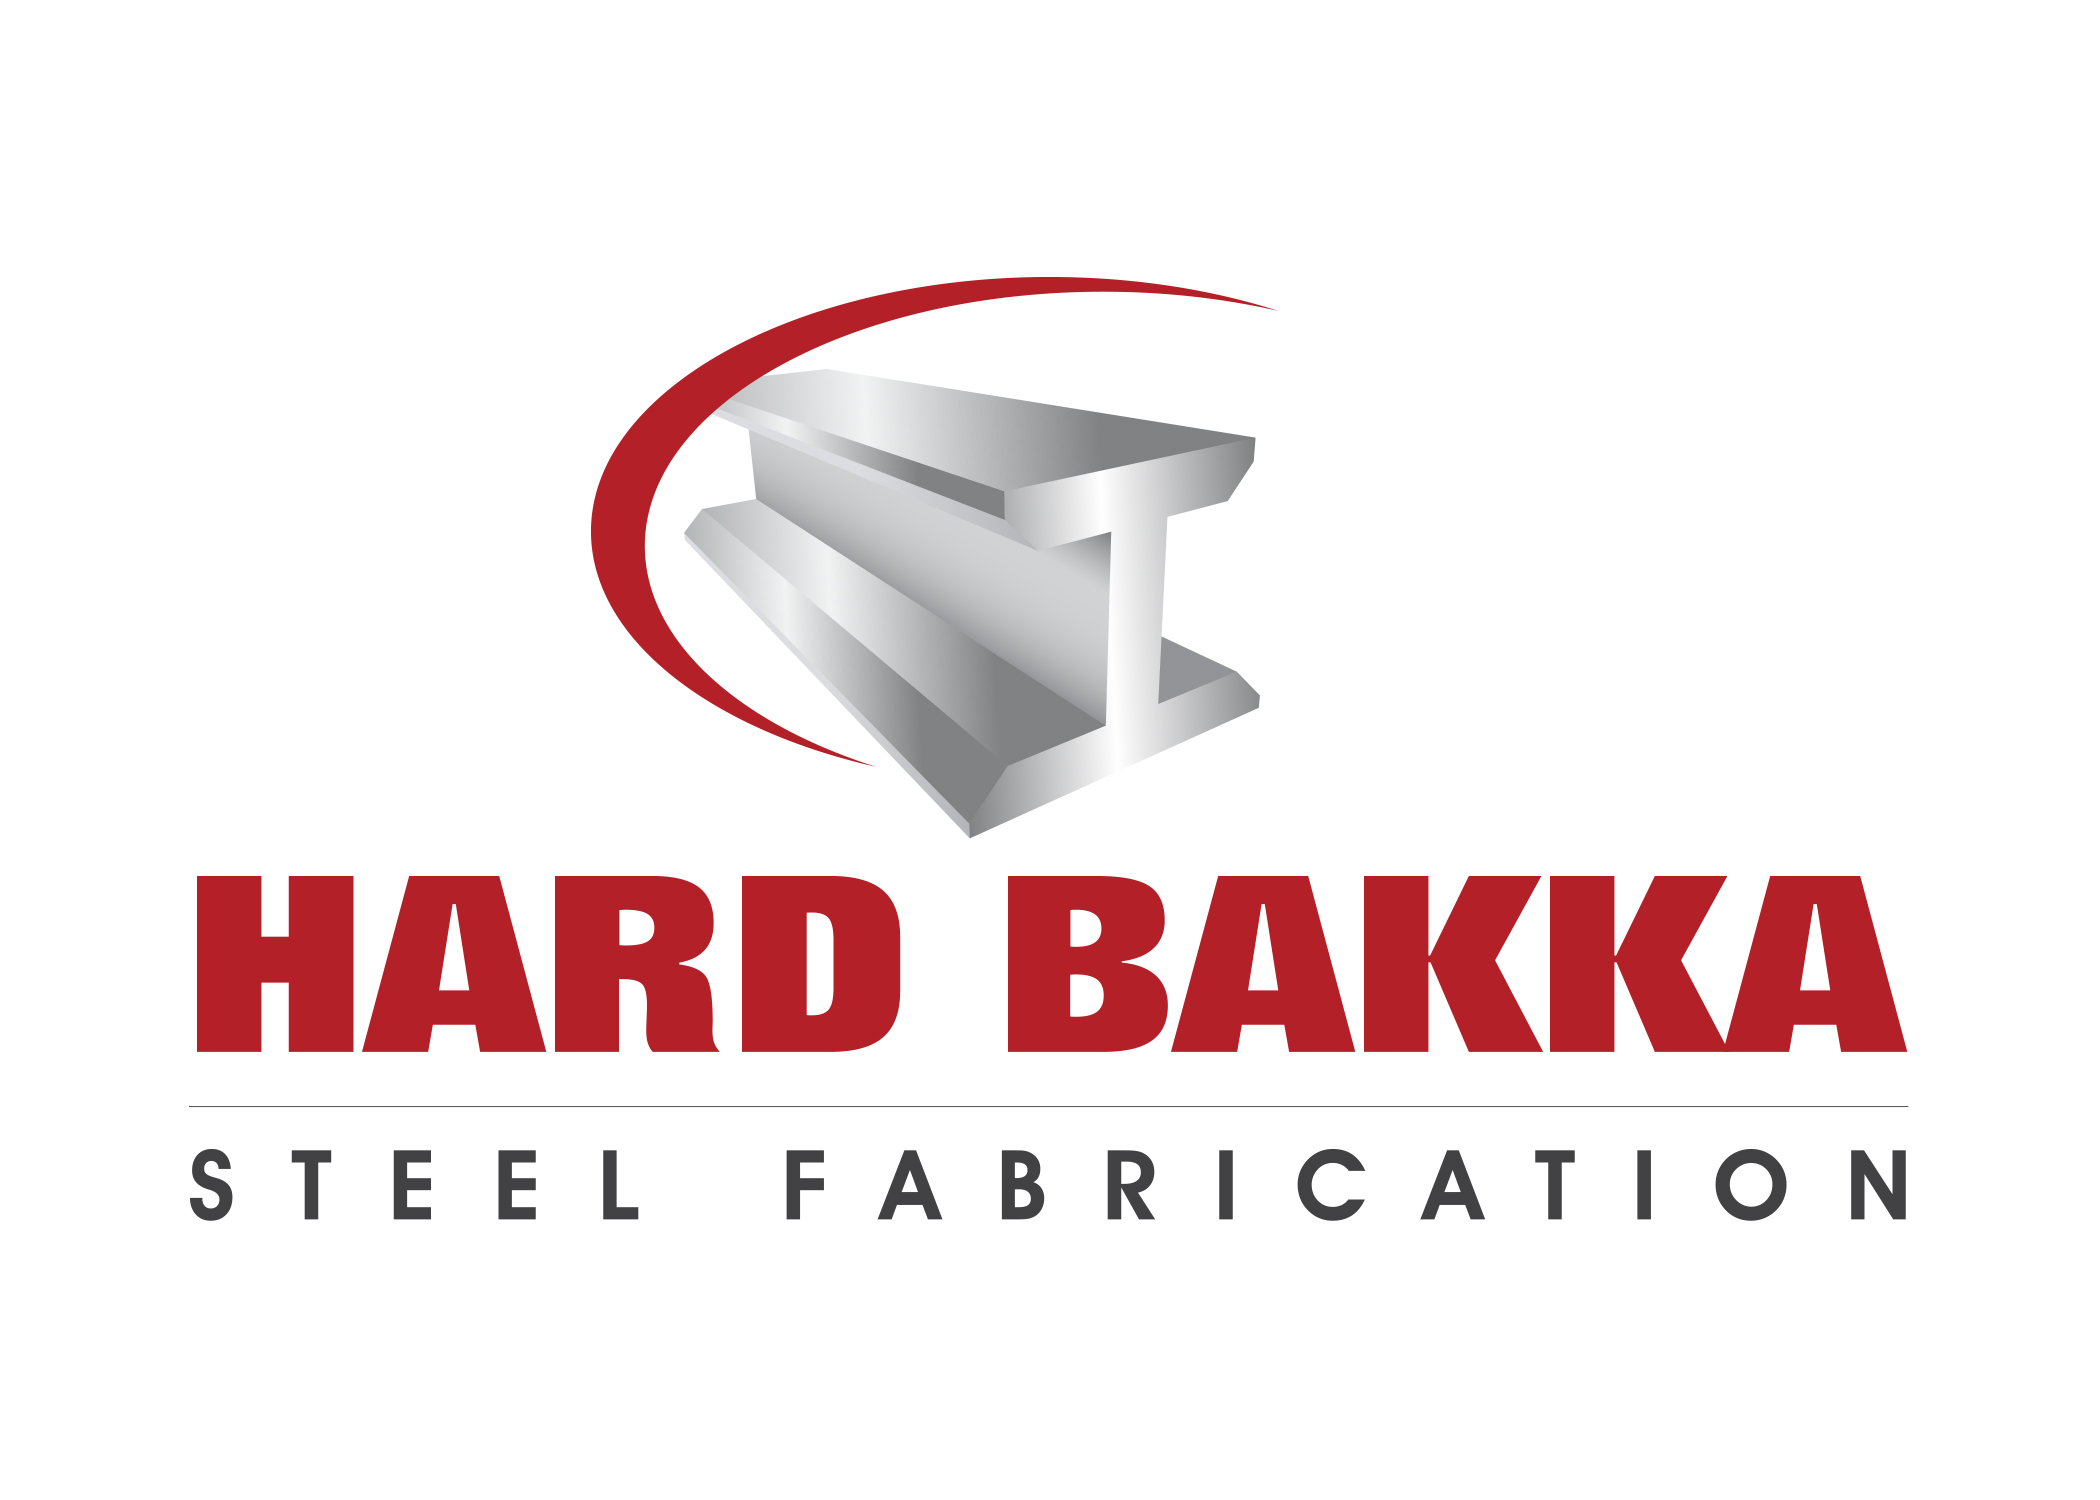 Hard Bakka - Steel Fabrication